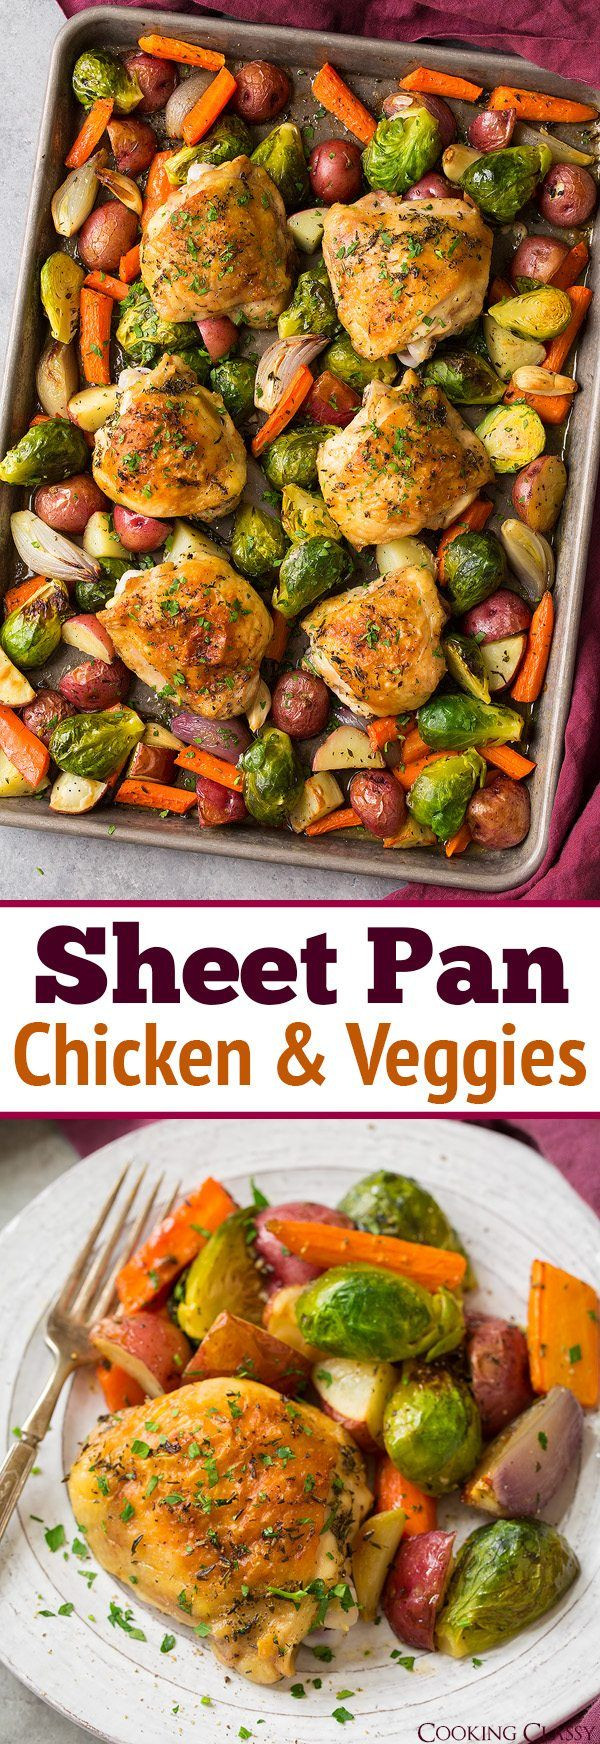 Sheet Pan Chicken Thighs And Veggies
 Sheet Pan Chicken and Veggies A convenient simple